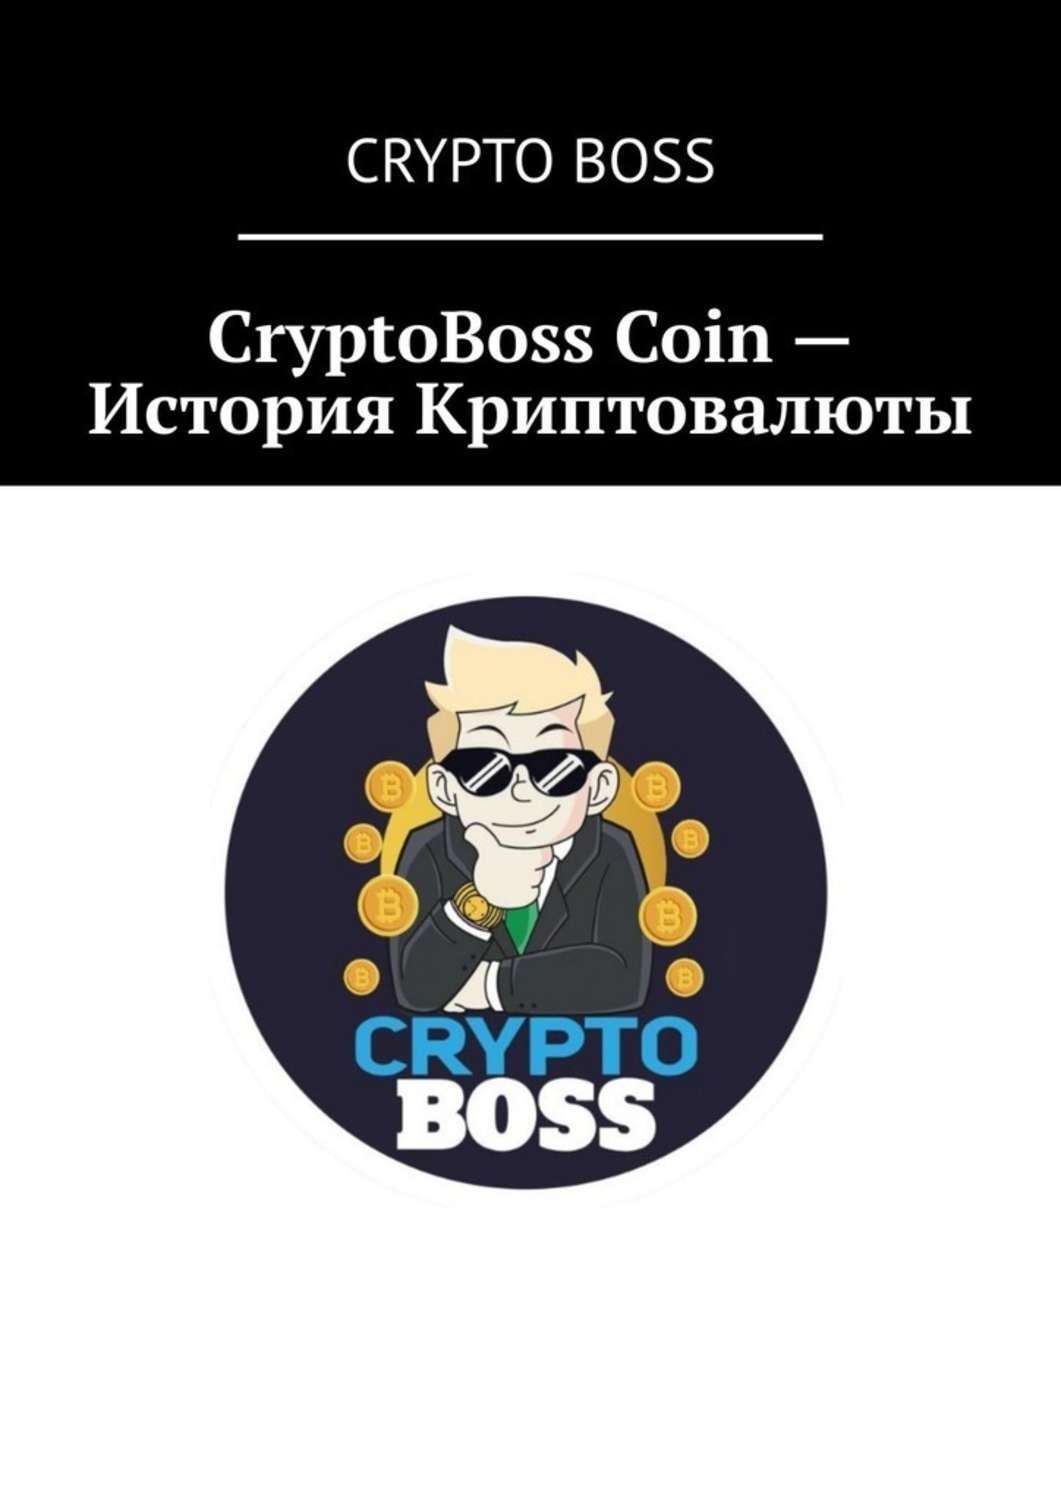 Crypto boss зеркало cryptoboss casino ru. CRYPTOBOSS. Crypto Boss. Крипто книга. Фото крипто бос.